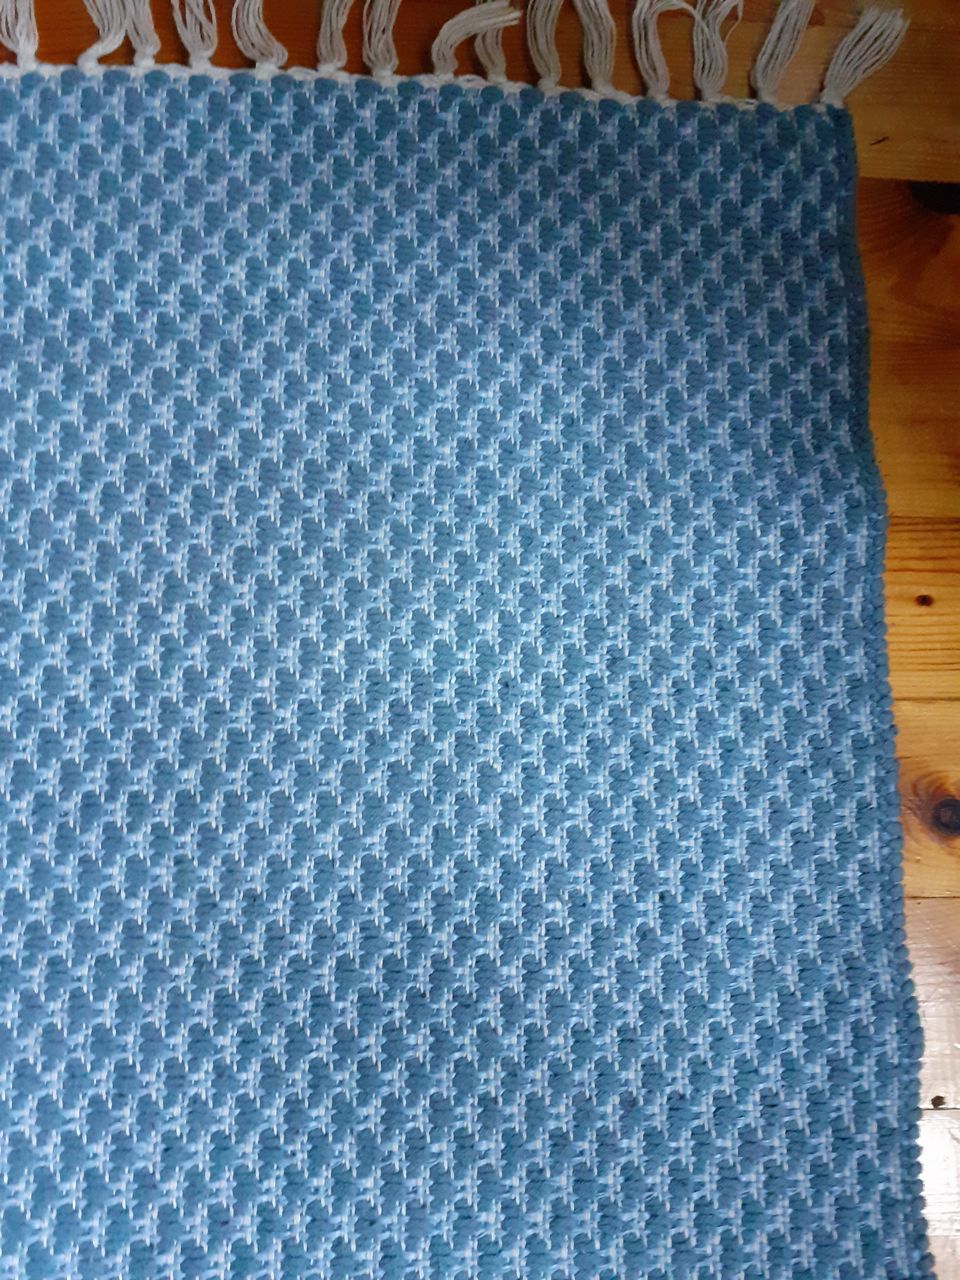 Sininen matto. Pituus n. 190 cm. leveys n. 130 cm